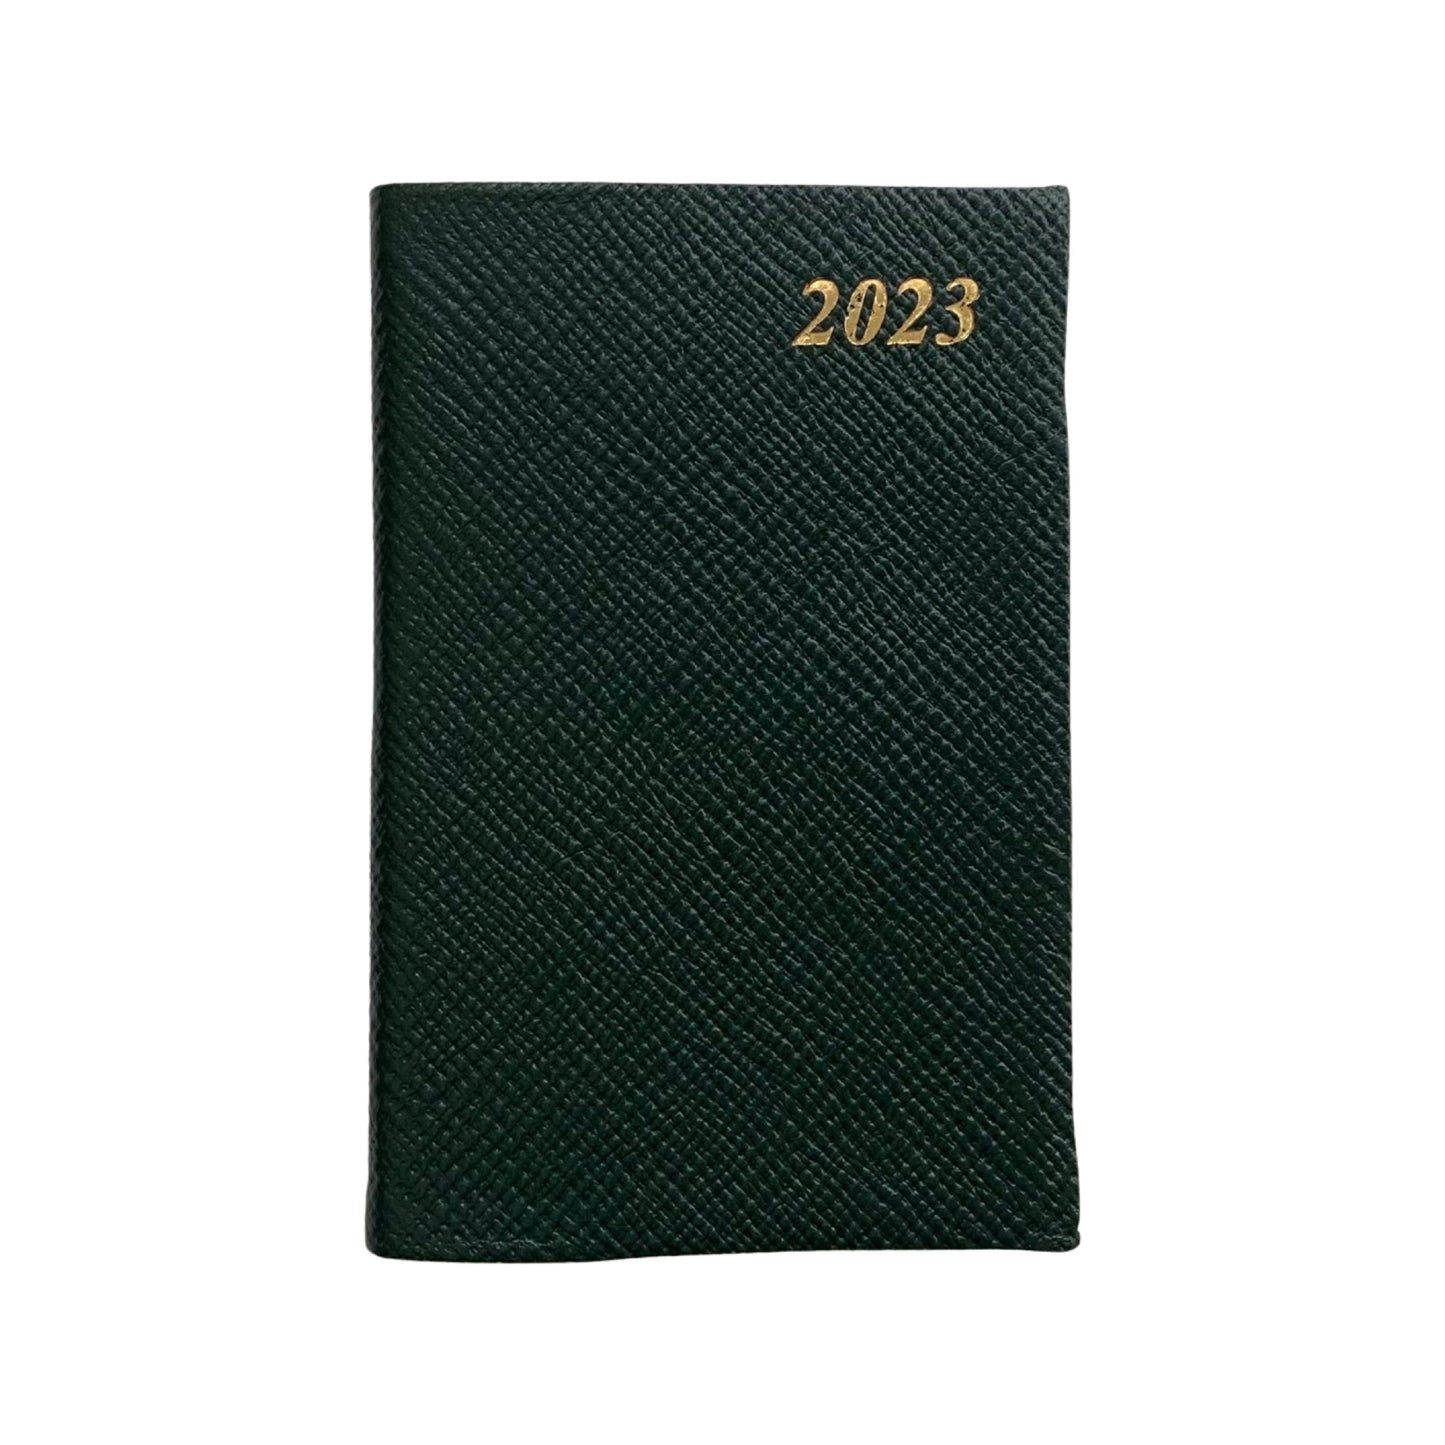 YEAR 2023 CROSSGRAIN Leather Pocket Calendar Book | 4 x 2.5" | D742L